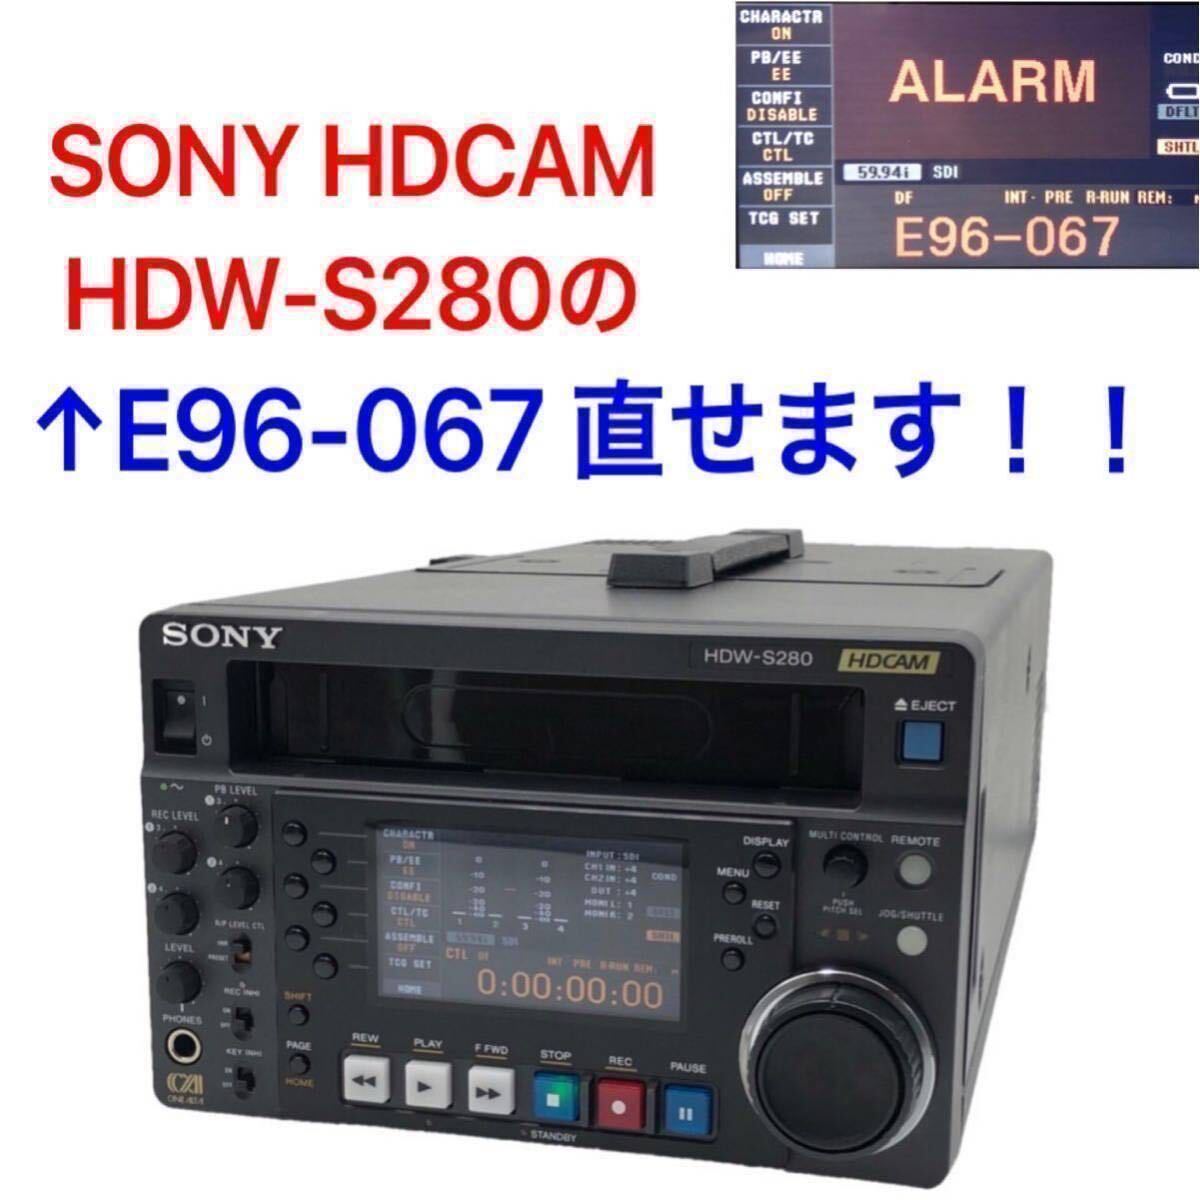 SONY HDCAM ошибка E96-067 прямой ..!!HDW-S280 резервная копия аккумулятор замена 03